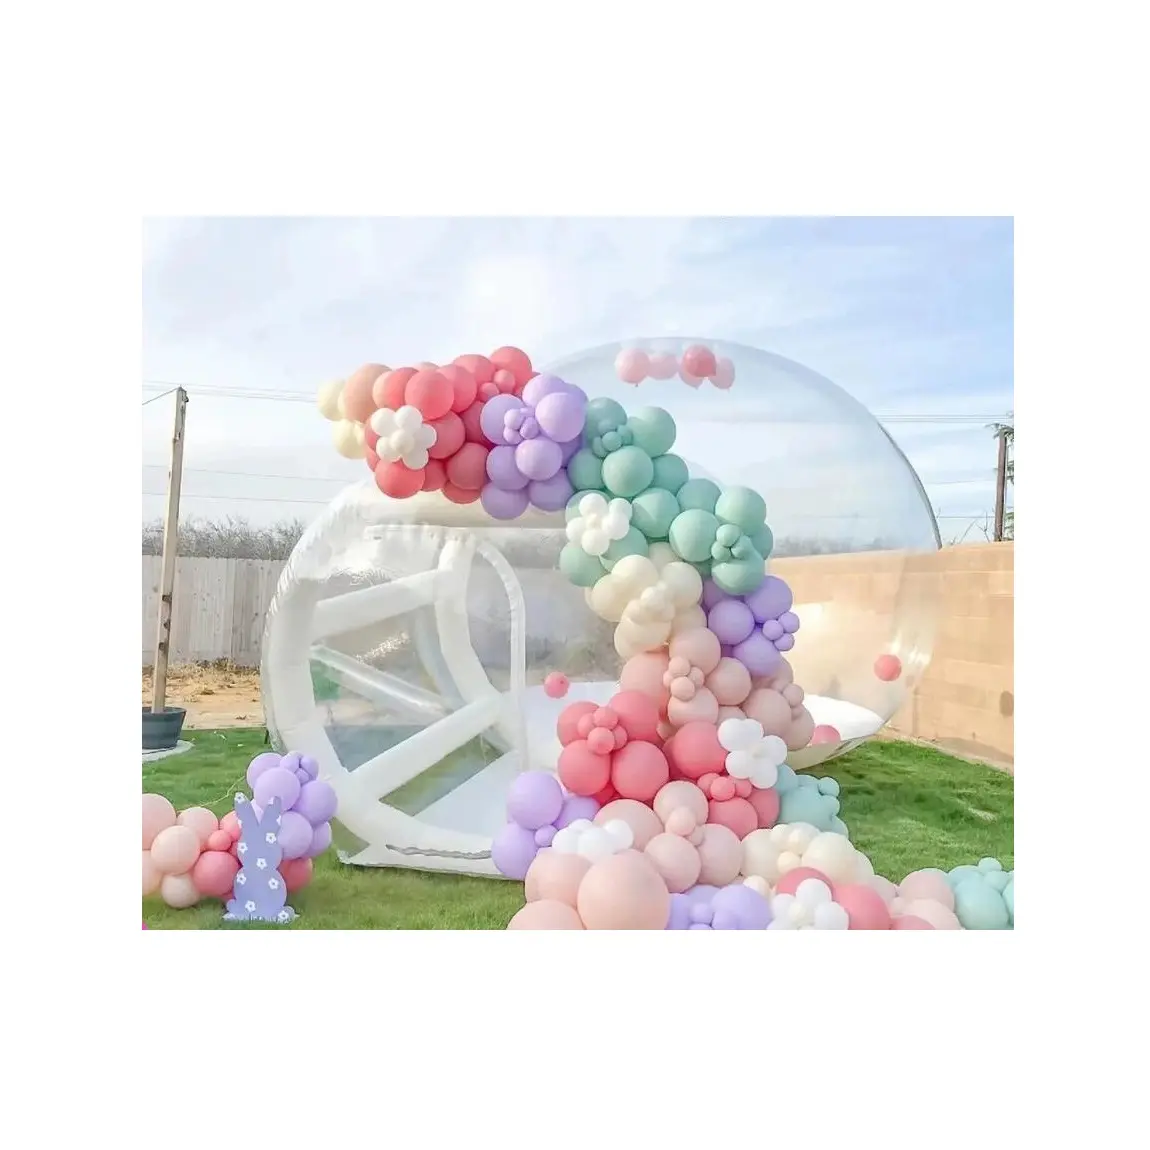 Kids Funny Party Bolha gigante cheia de balões Transparente Inflável Bubble Dome Balloons House